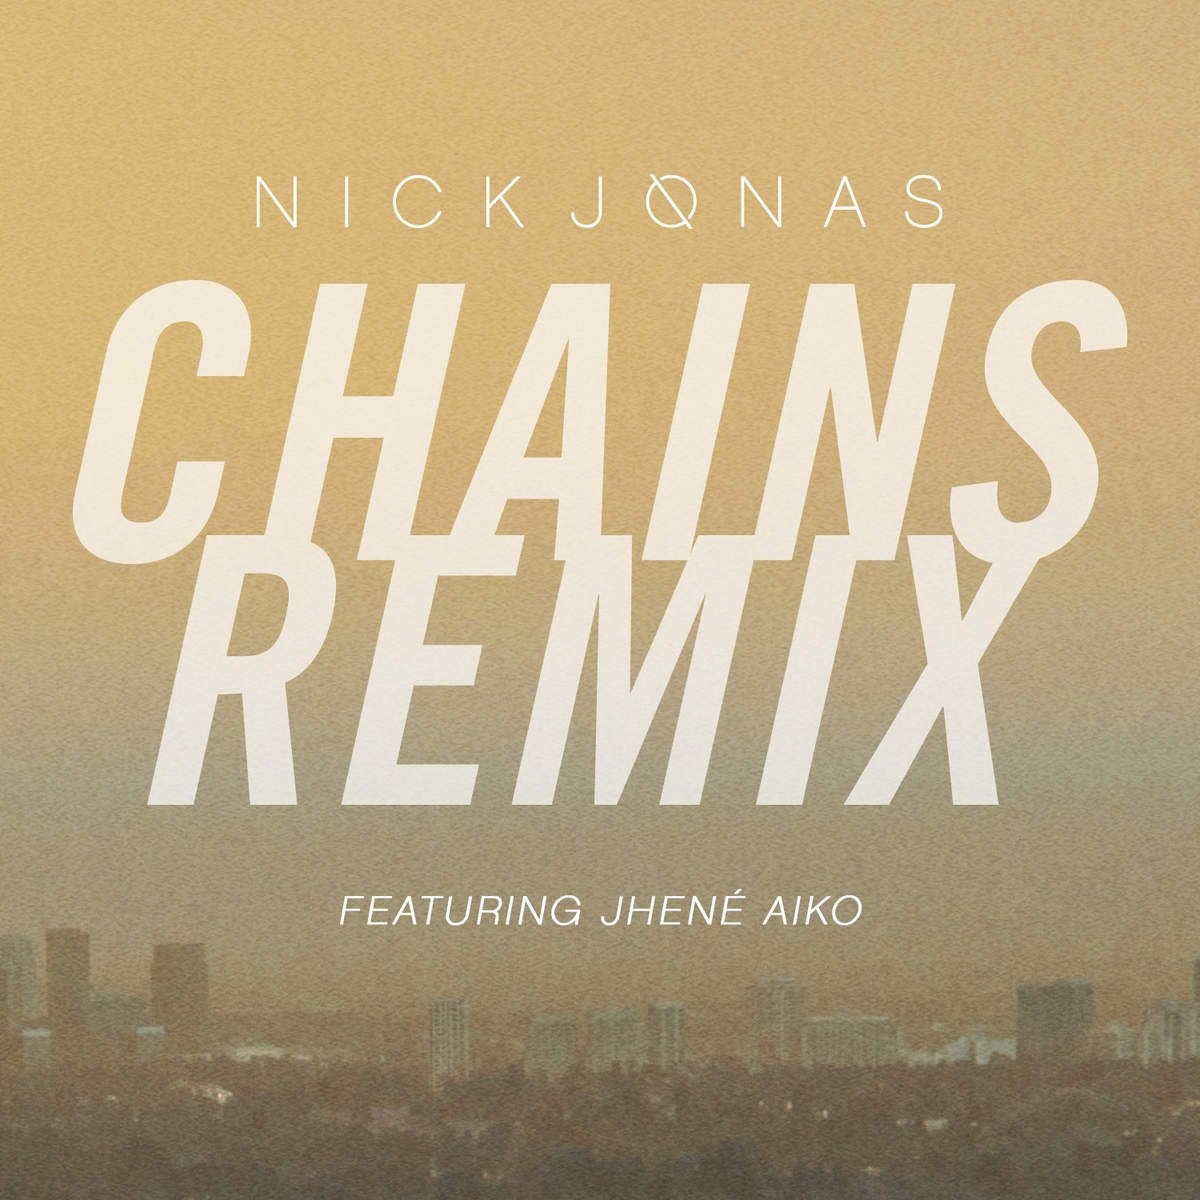 Nick музыка. Nick Jonas - Chains. Can't be Soft Remix / the Chain Remix.